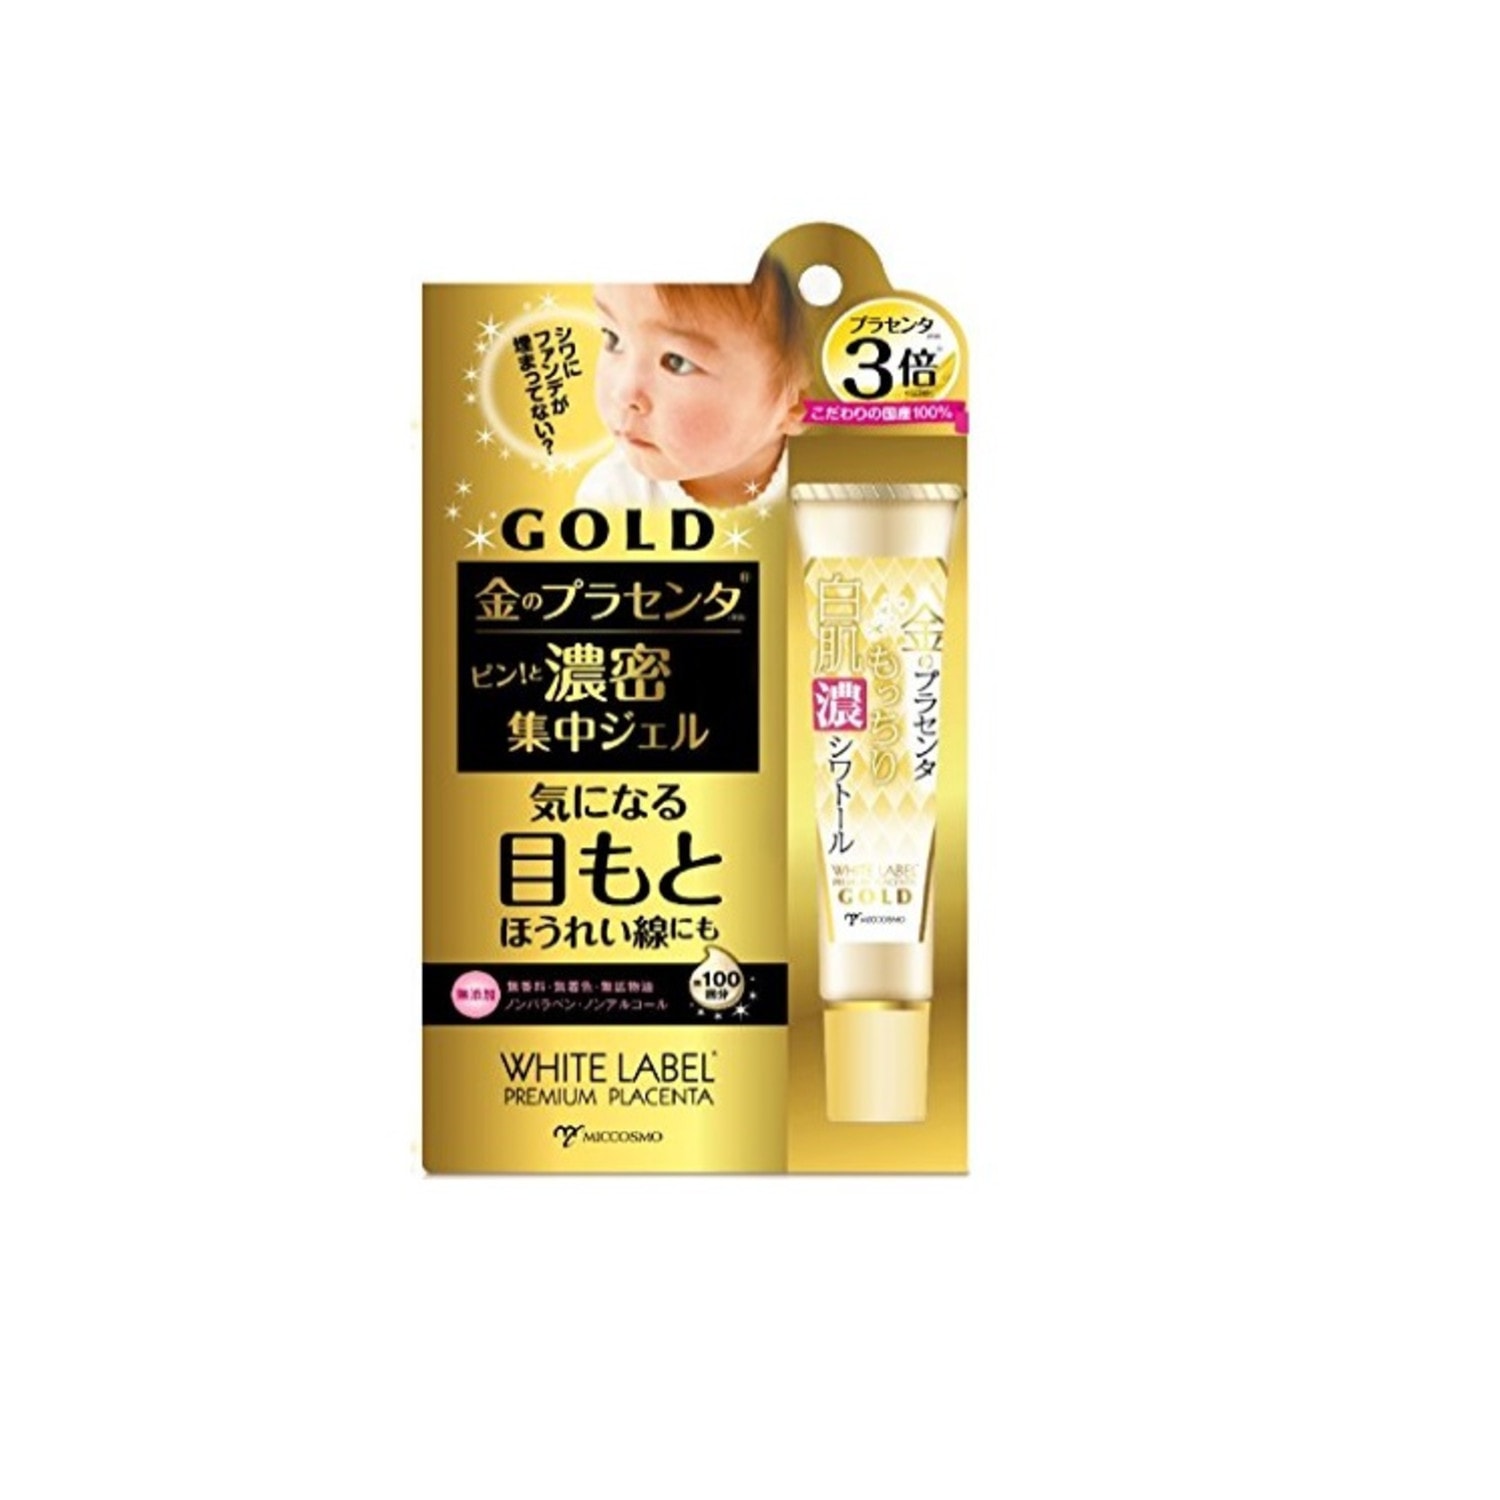 MiCCOSMO  Premium Placenta Gold Rich Eye Gel Гель для кожи вокруг глаз с плацентой, 30г. / 626407